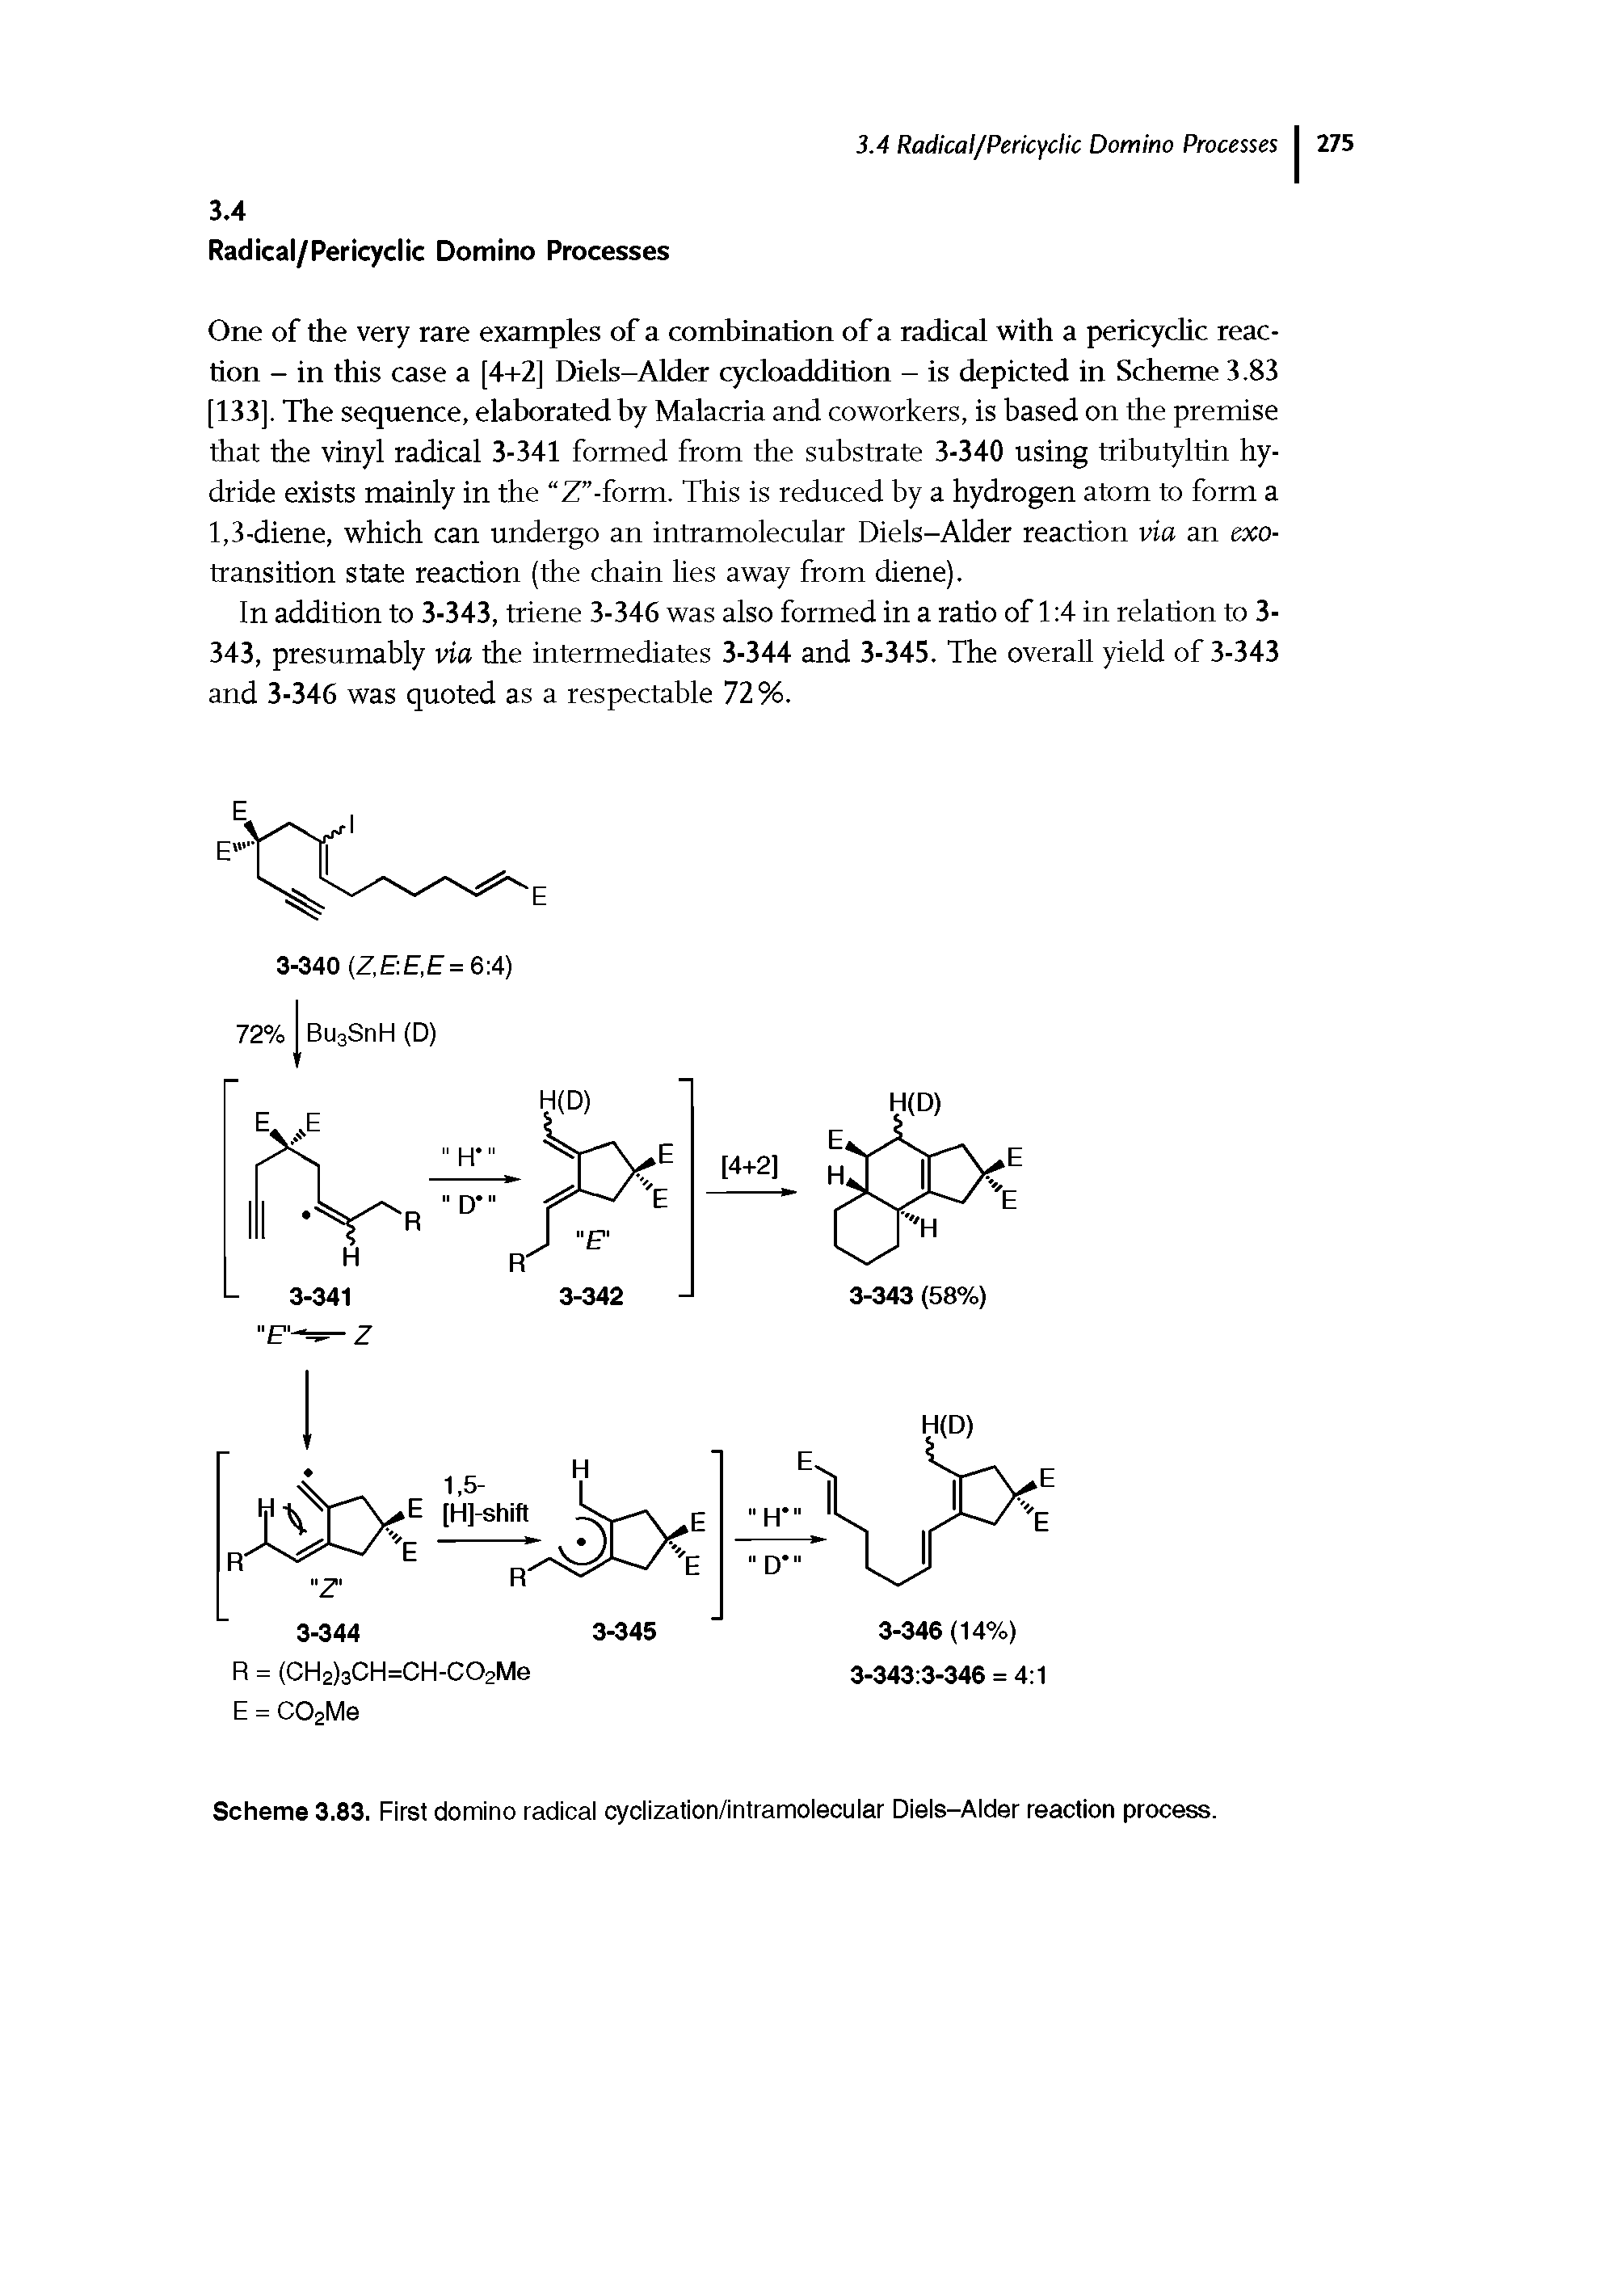 Scheme 3.83. First domino radical cyclization/intramolecular Diels-Alder reaction process.